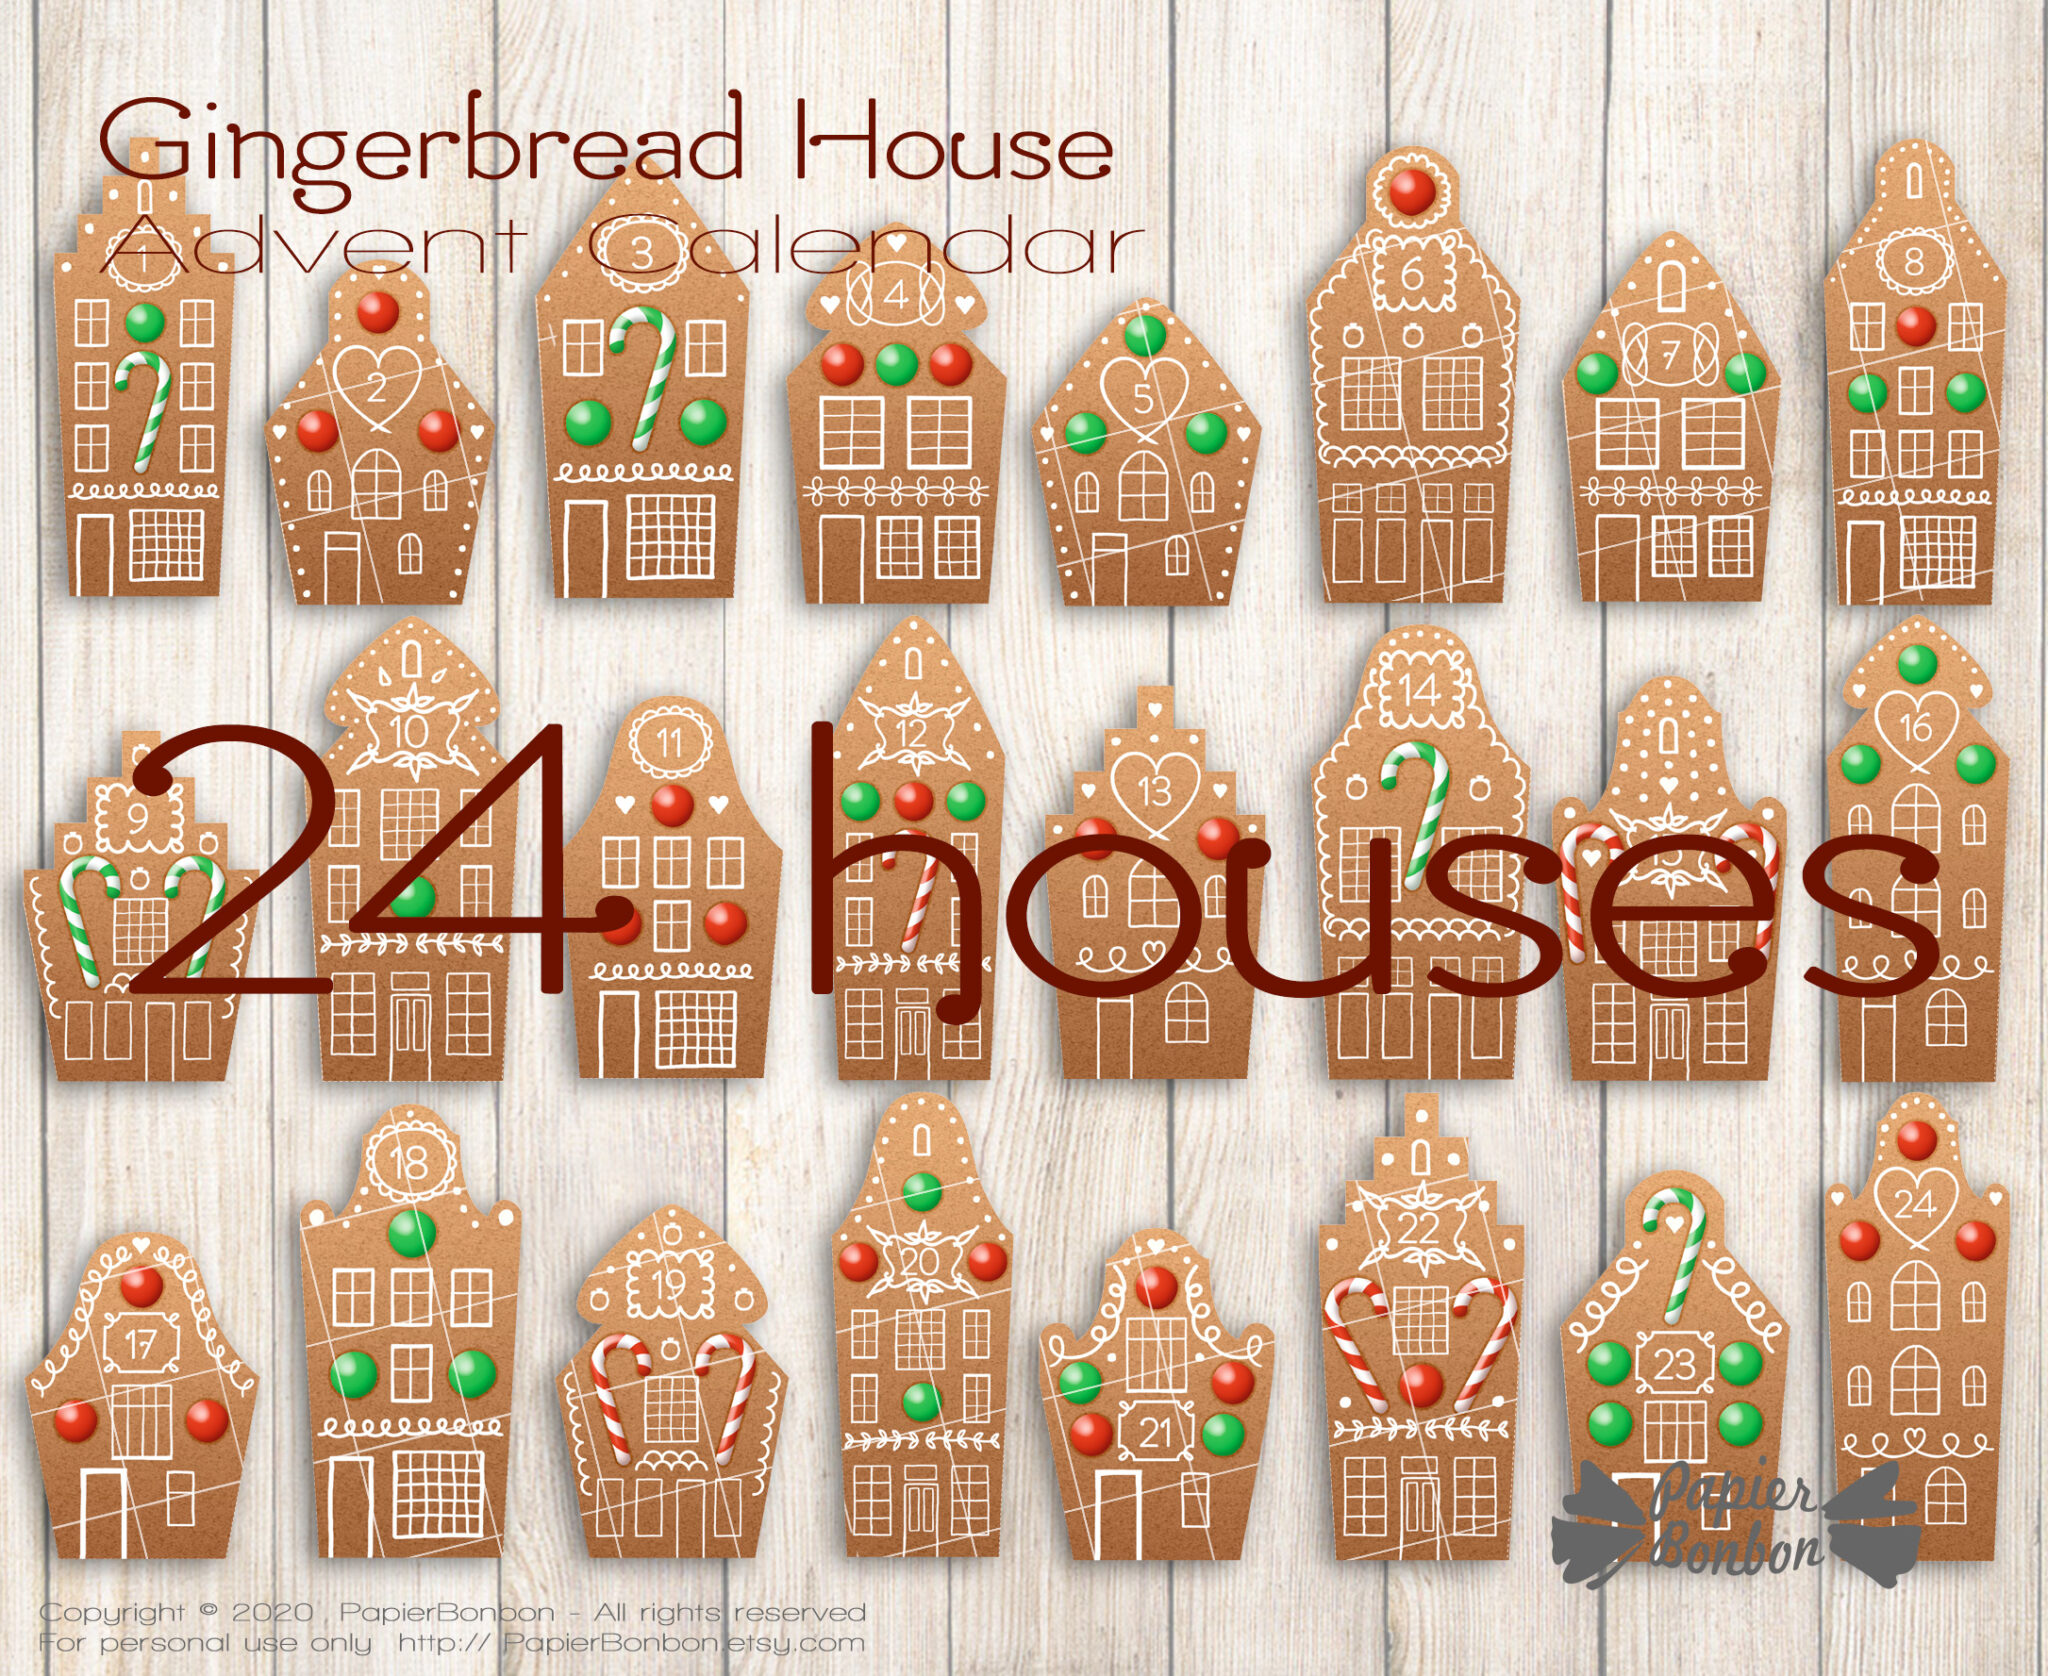 Gingerbread house Advent calendar Papier Bonbon